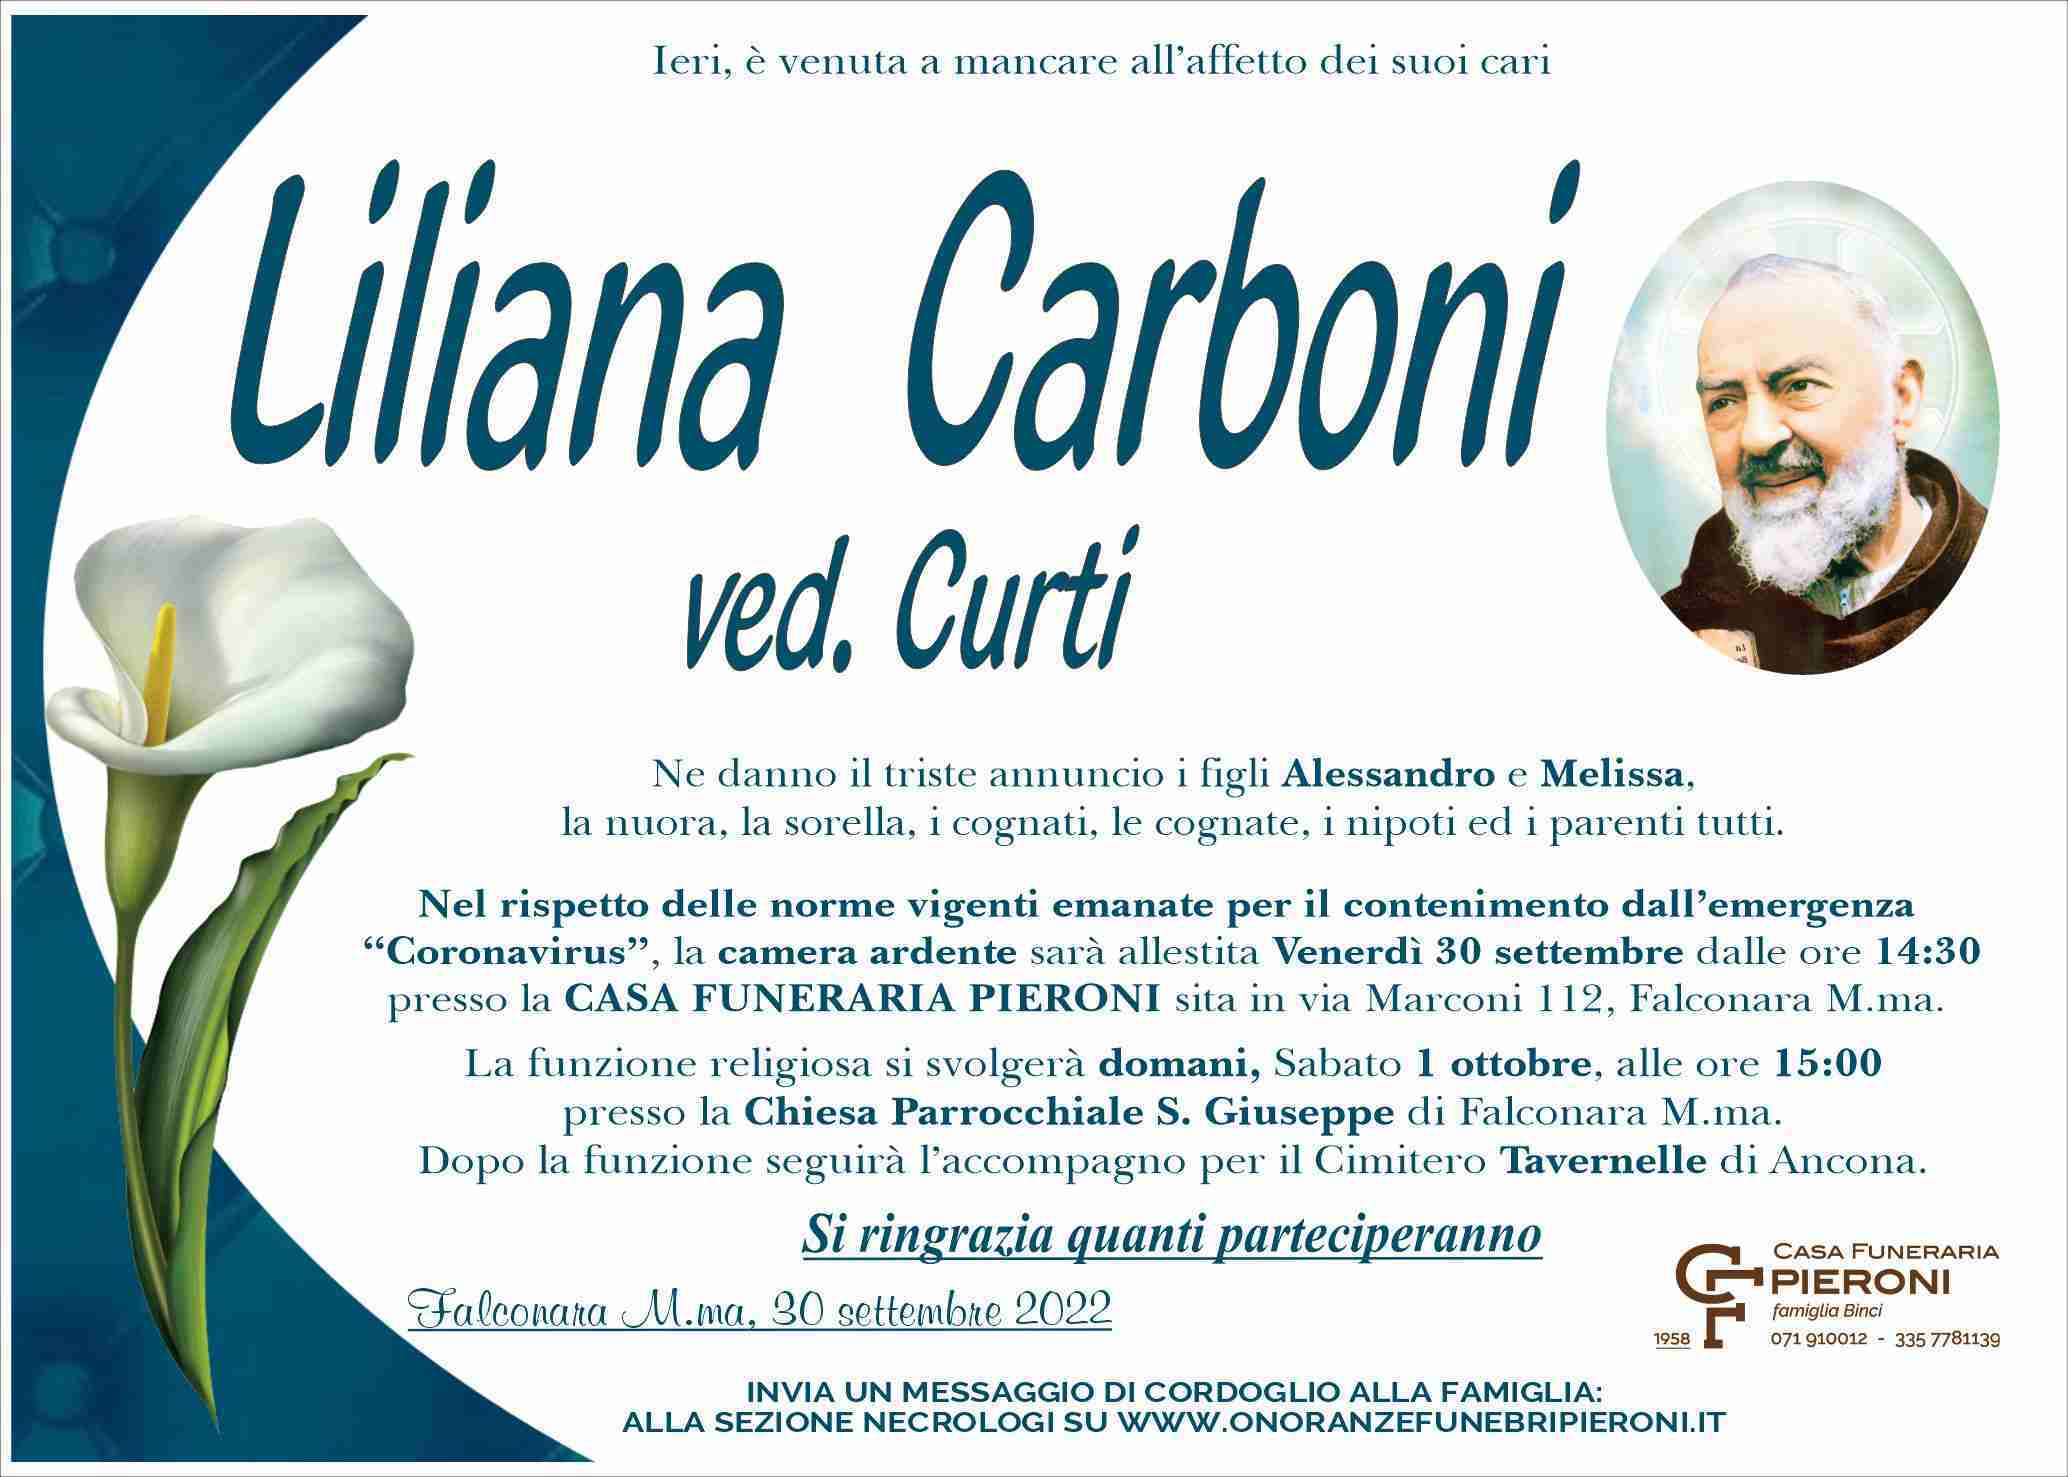 Liliana Carboni